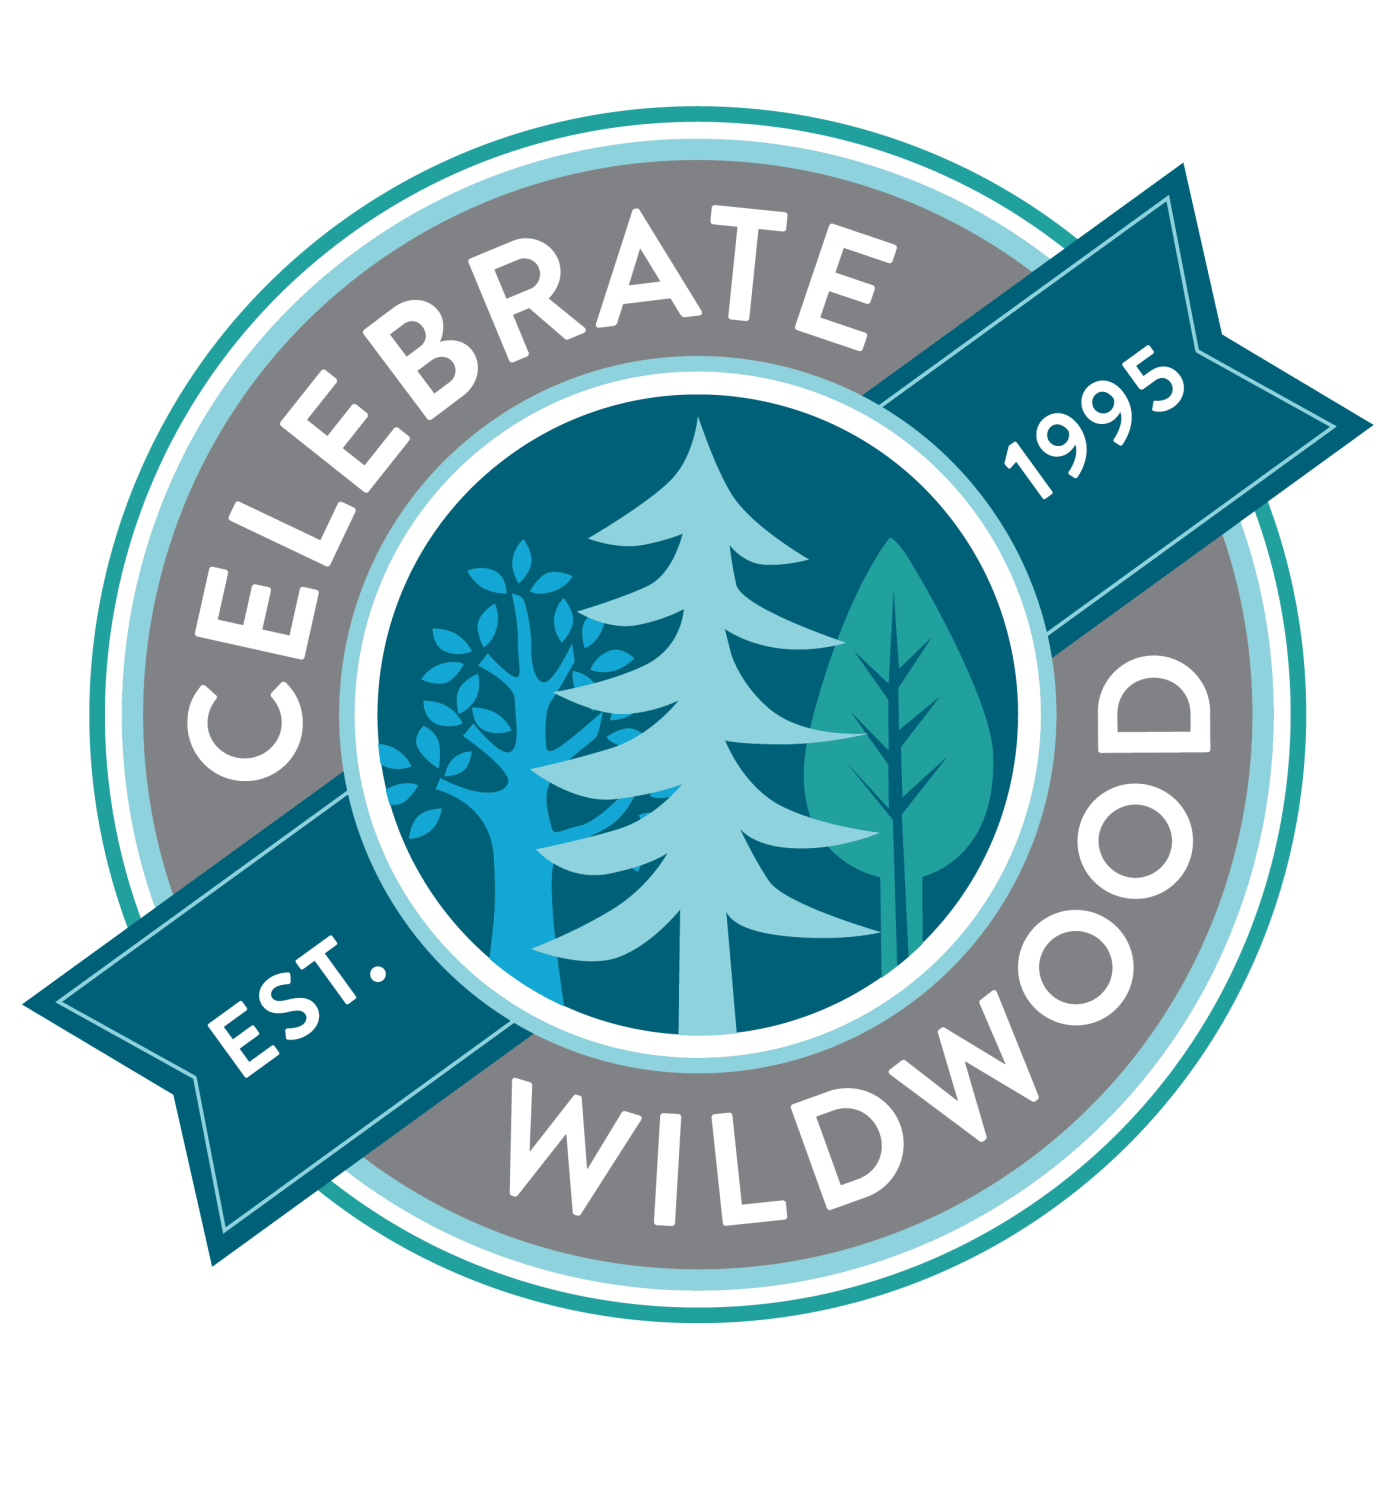 Celebrate Wildwood logo